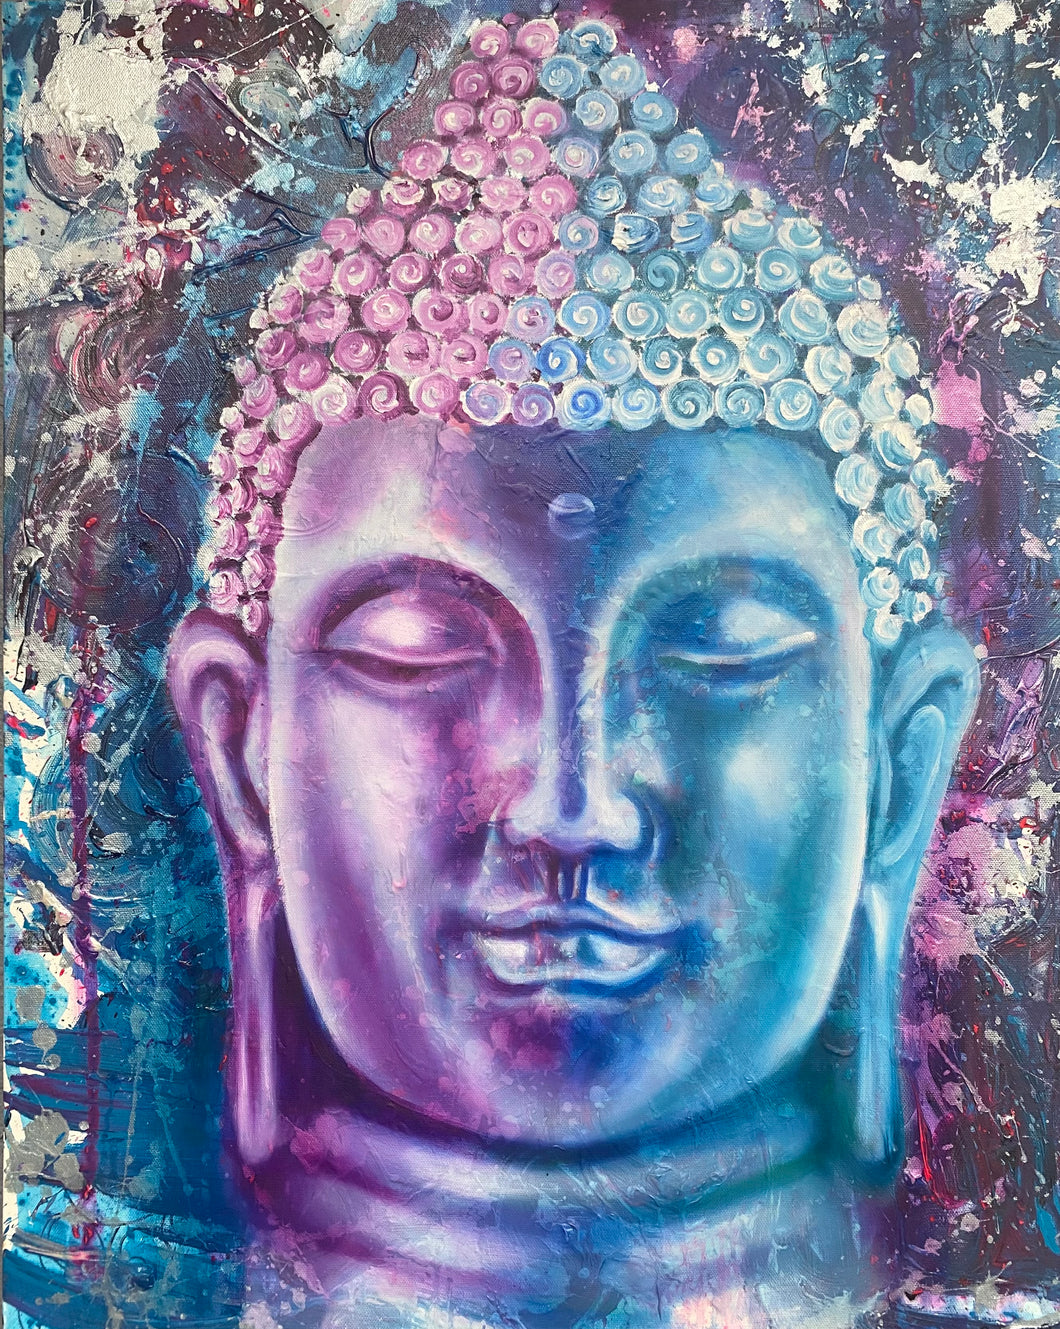 Azula Buddha